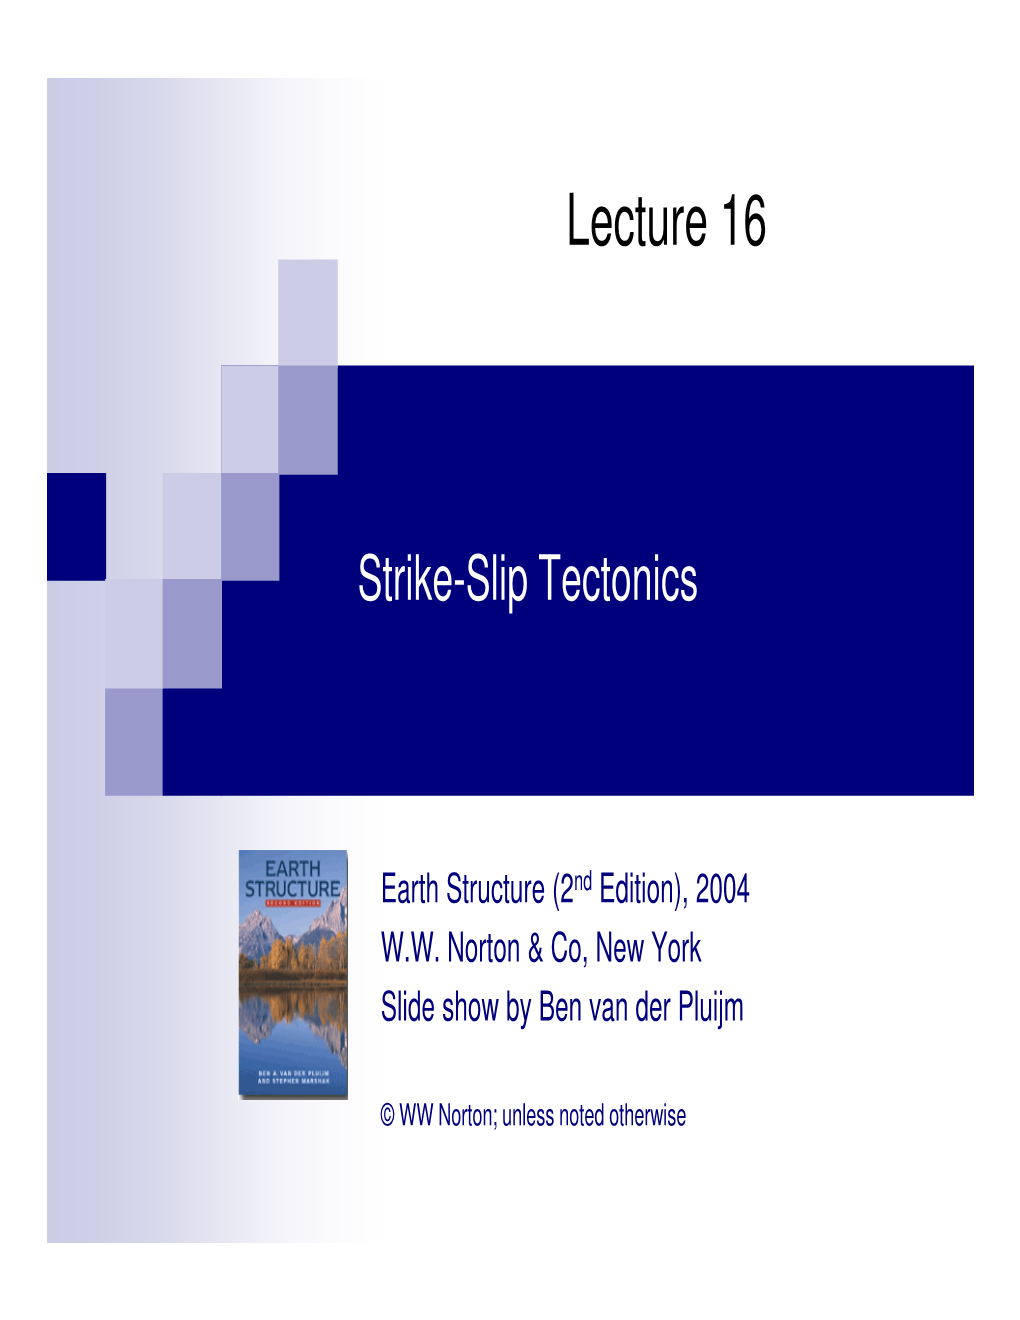 Oblique and Strike-Slip Tectonics